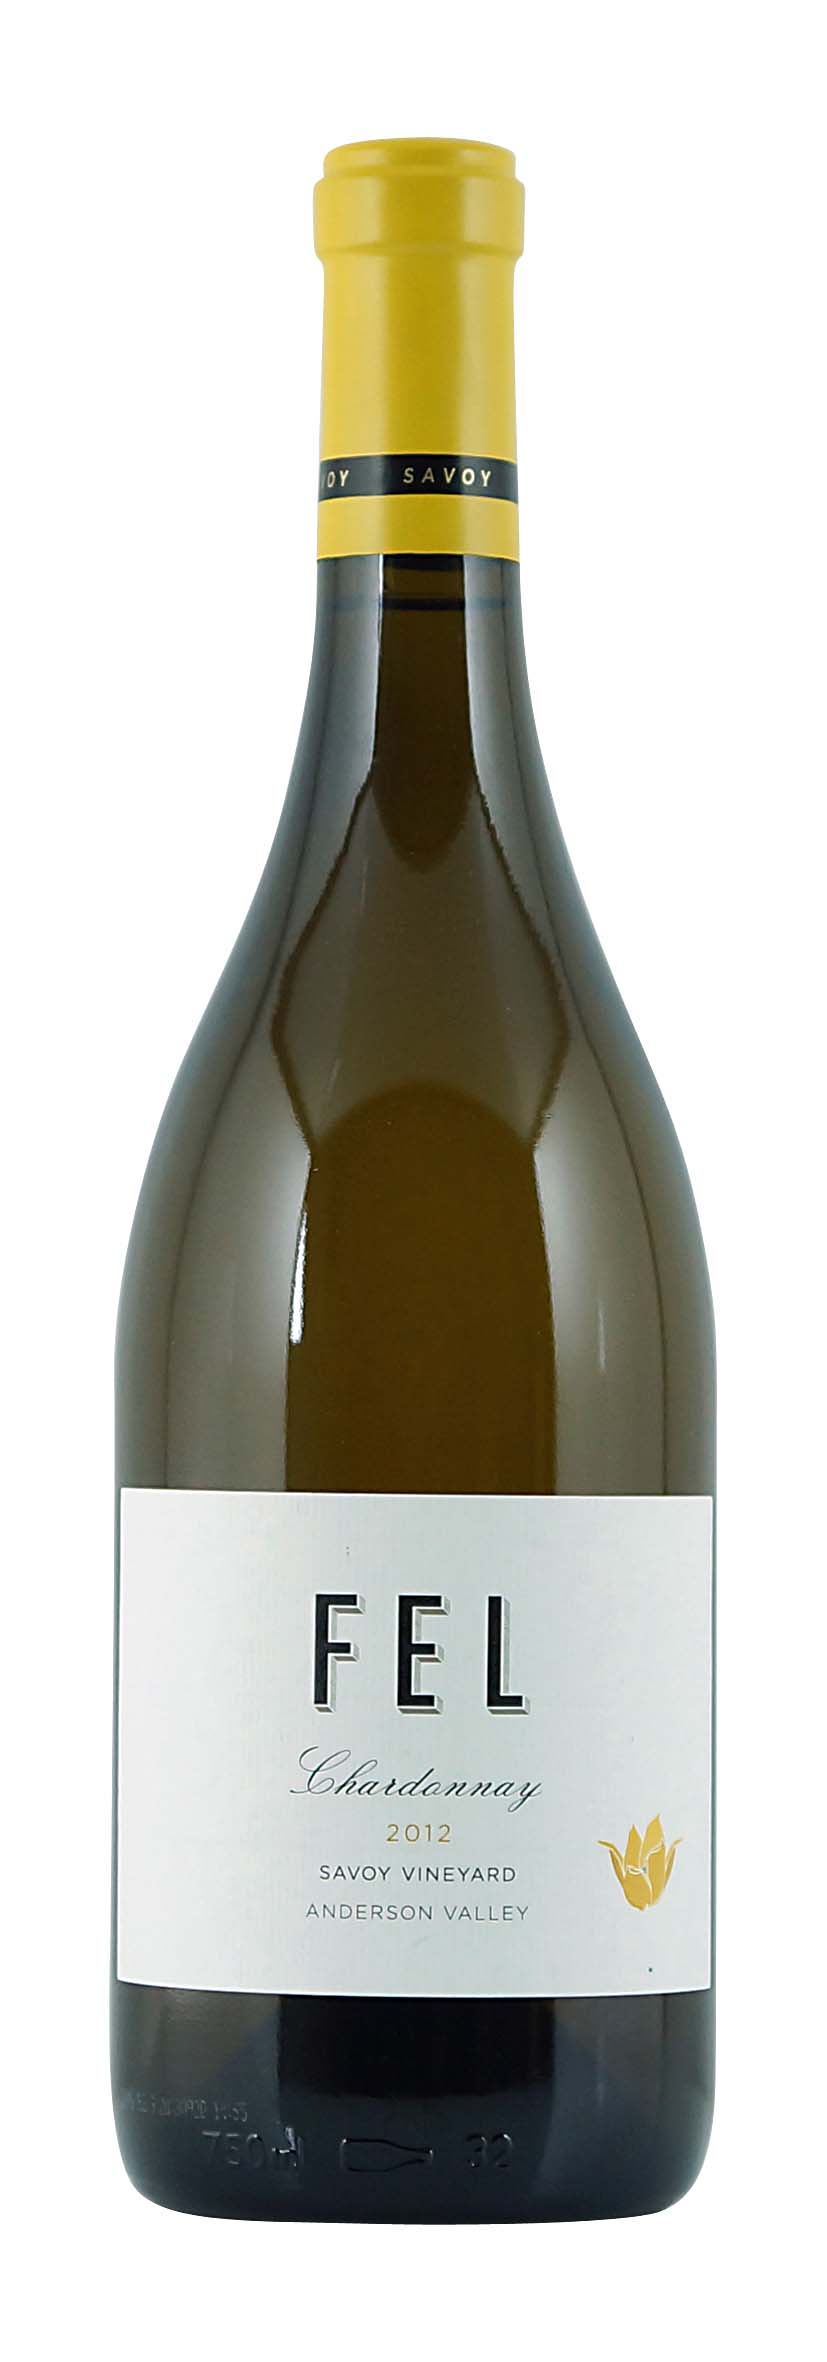 Anderson Valley Chardonnay Savoy Vineyard 2012